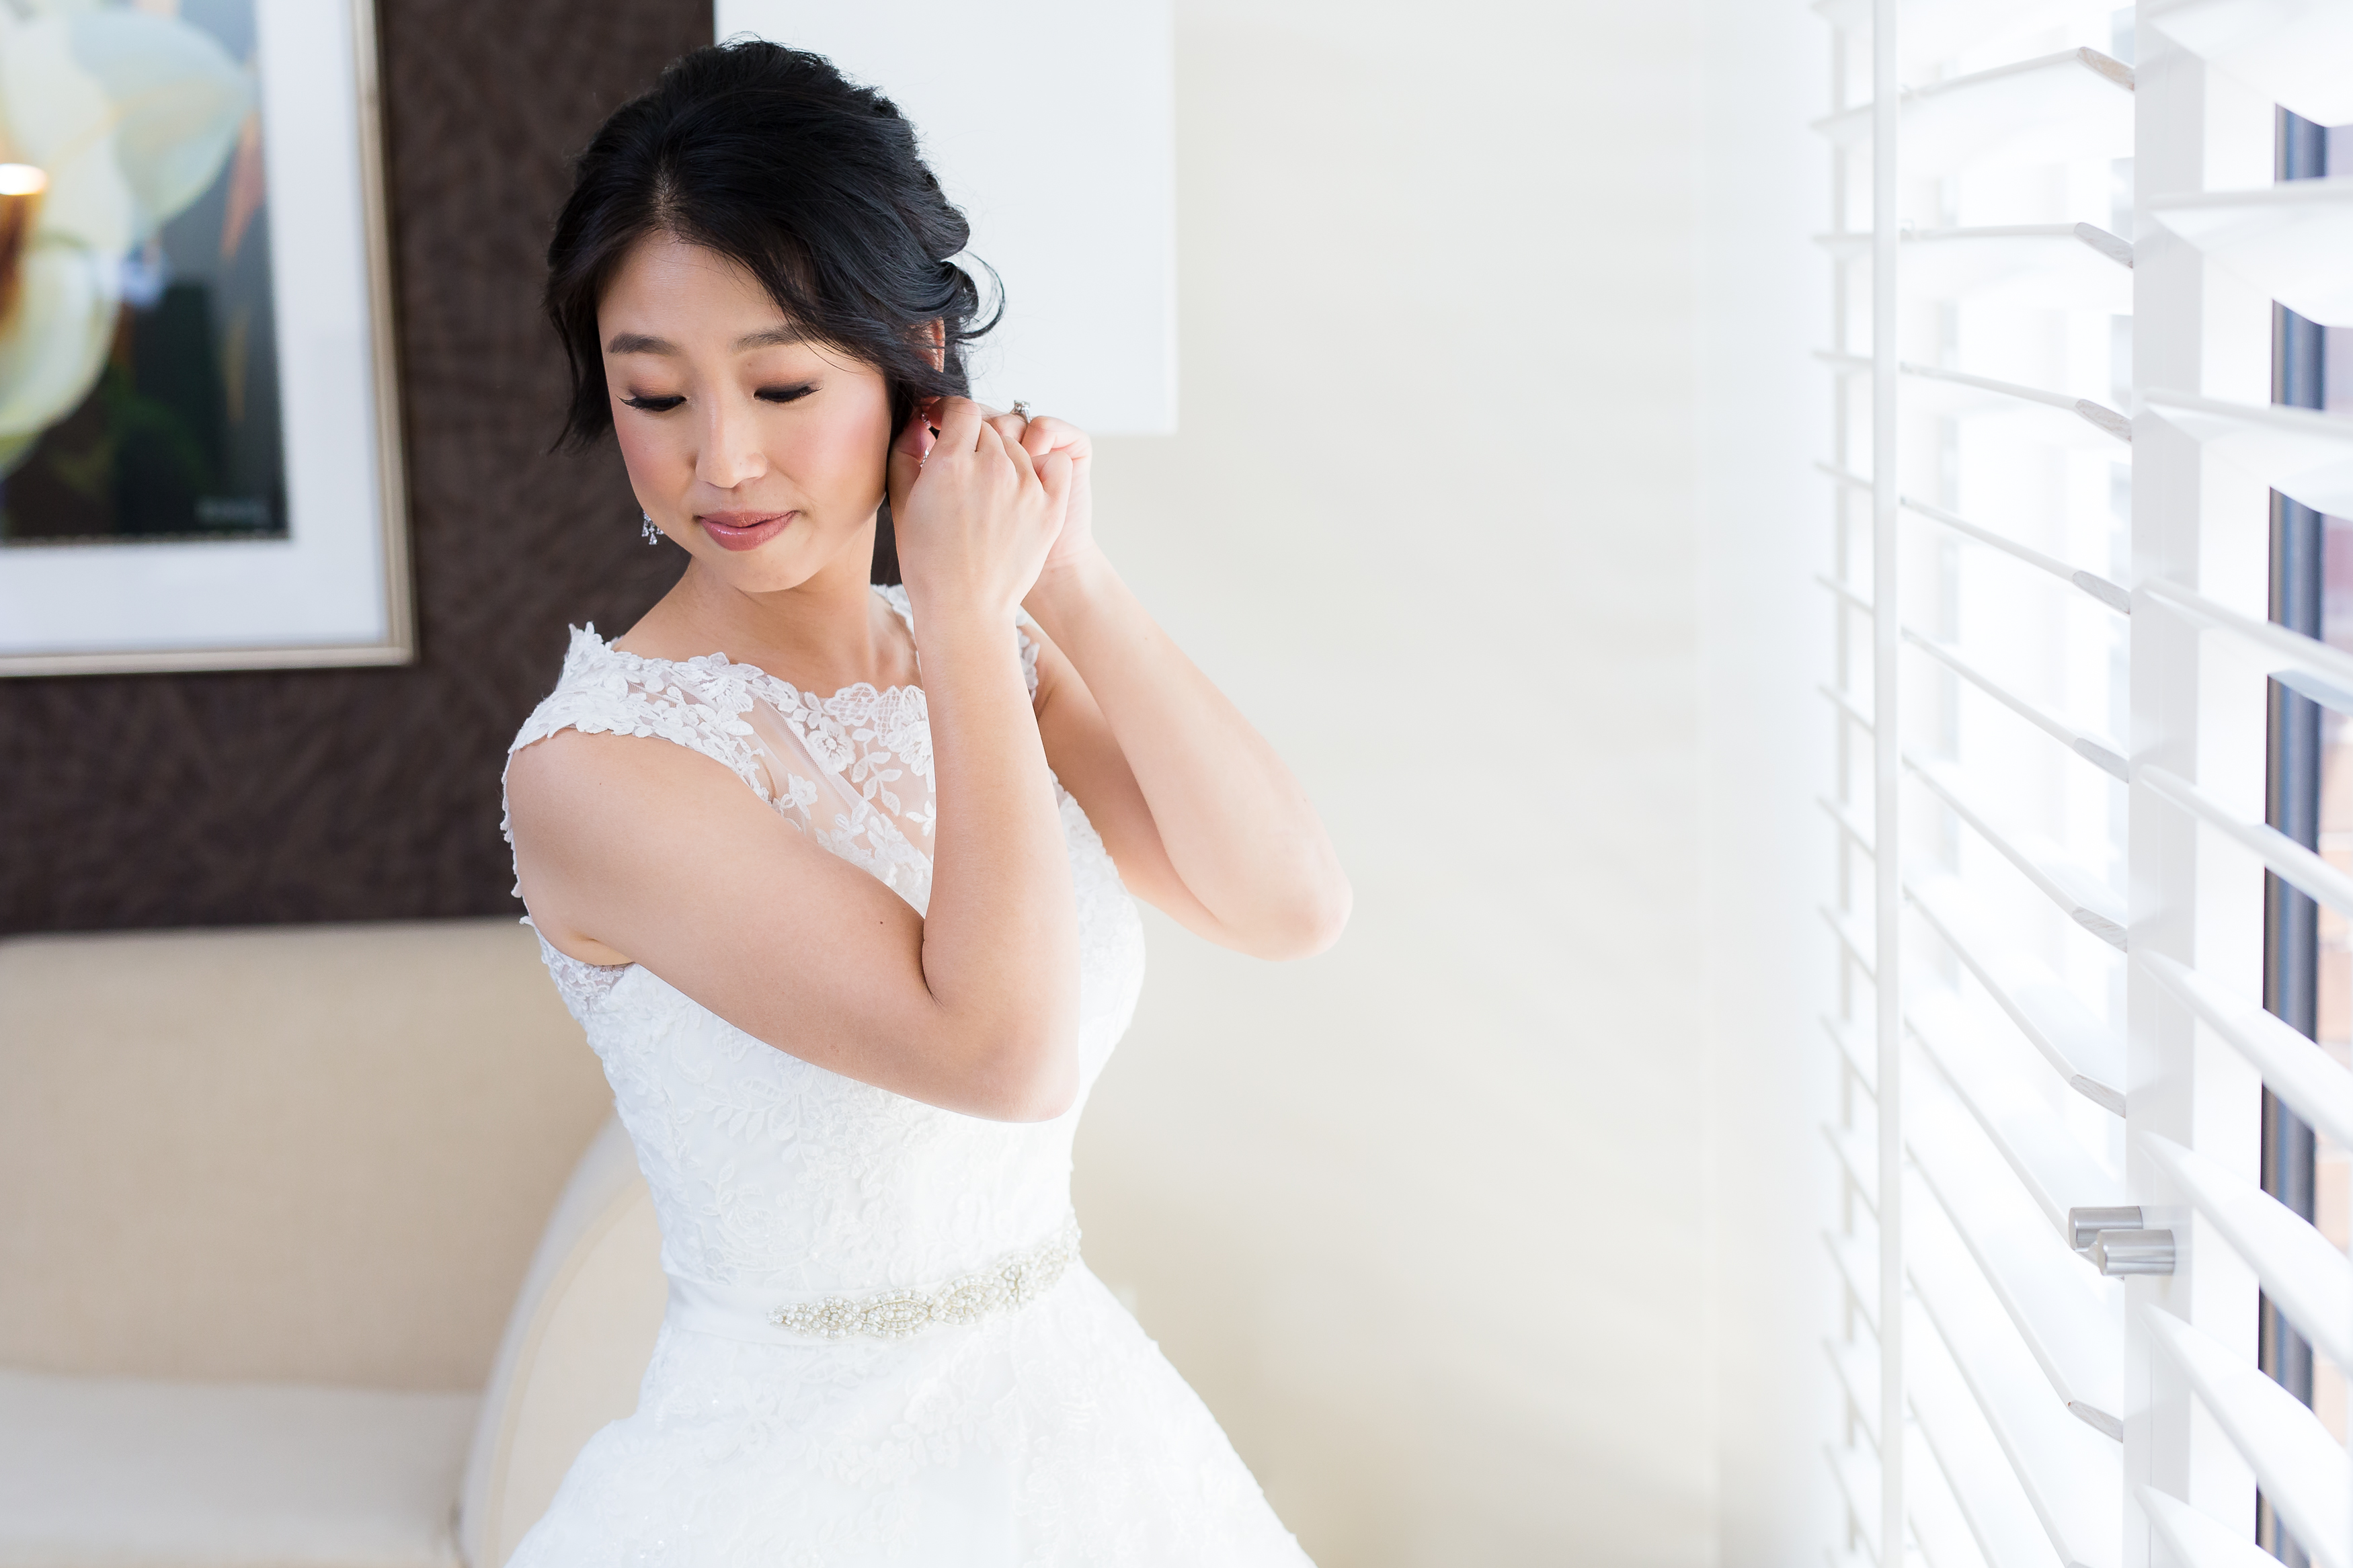 Beautiful woman in wedding dress adjusting earring